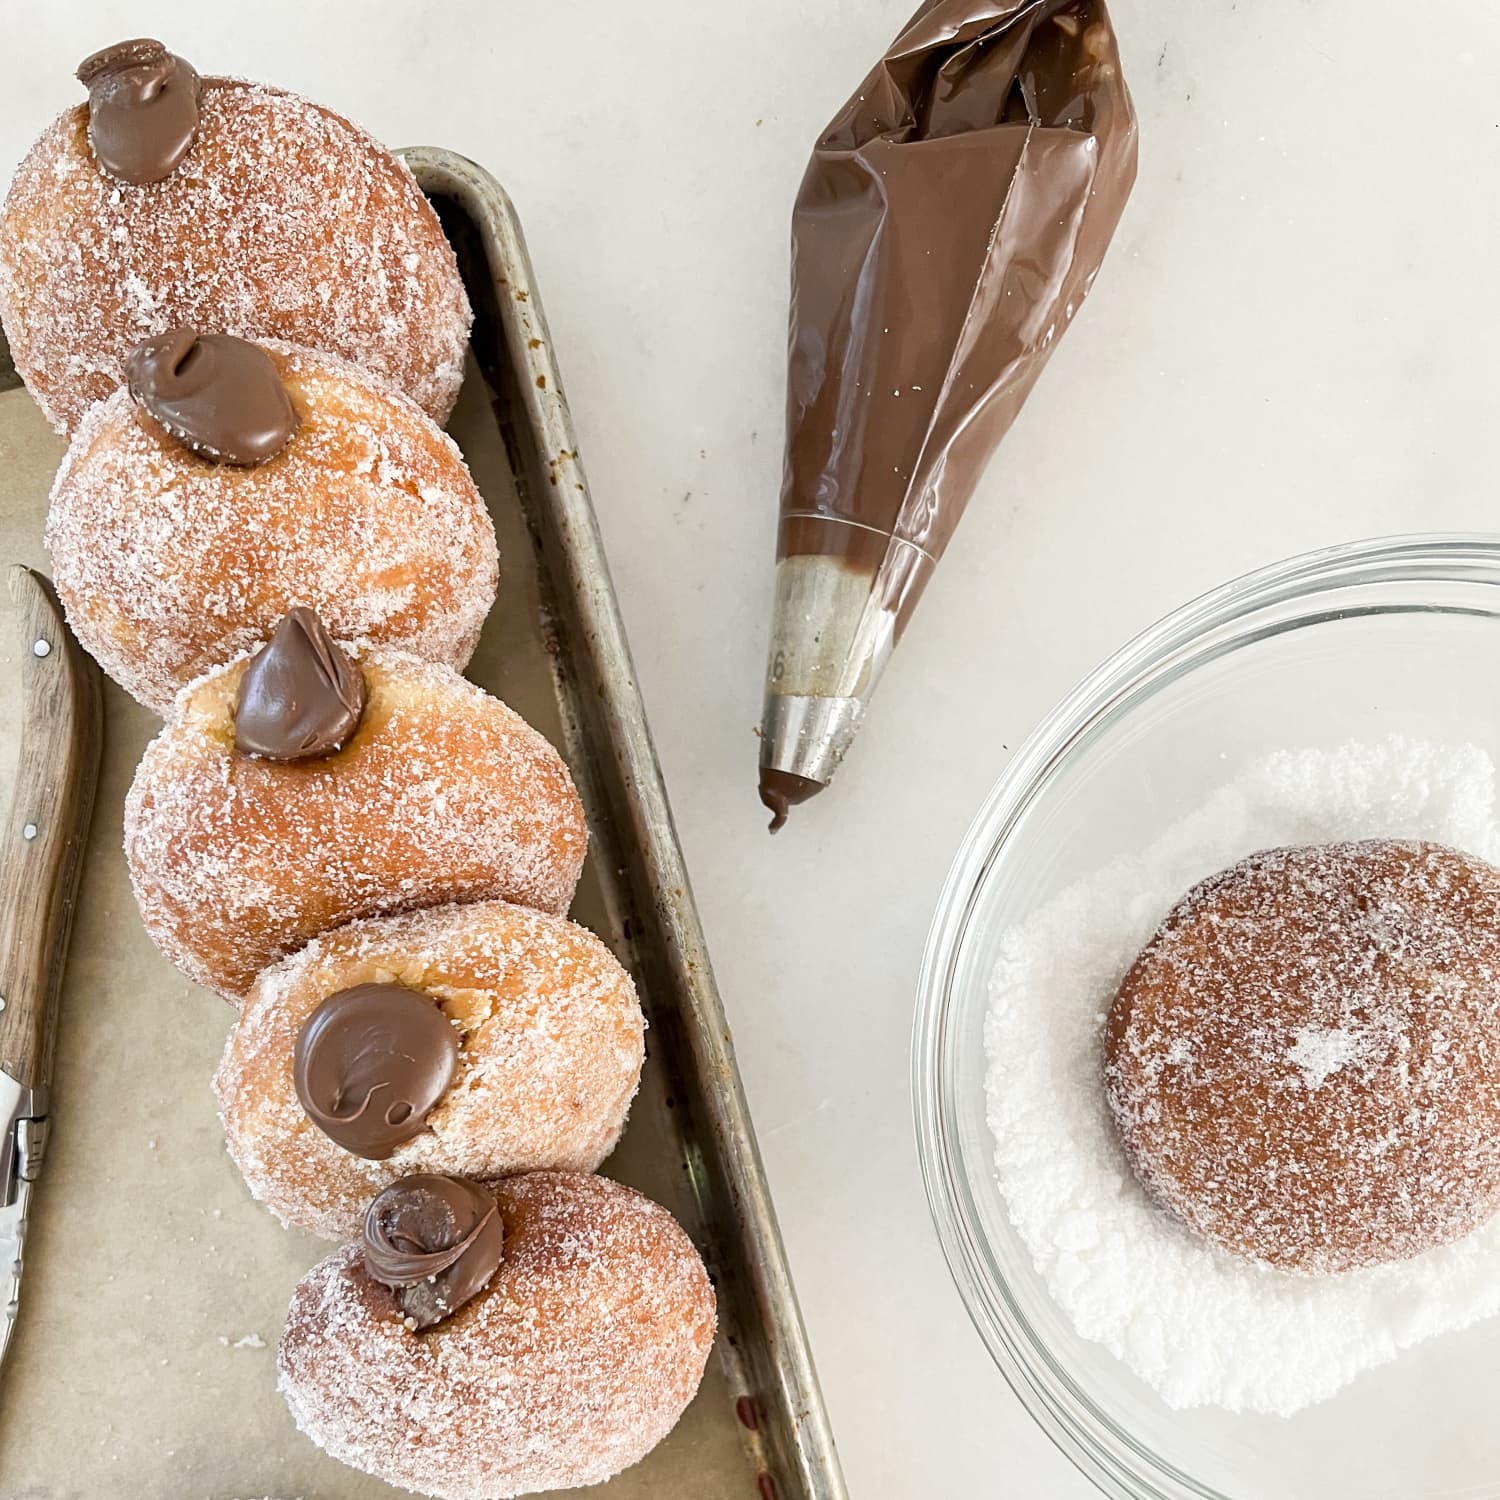 Bomboloni Recipe (Italian Doughnuts) | The Kitchn